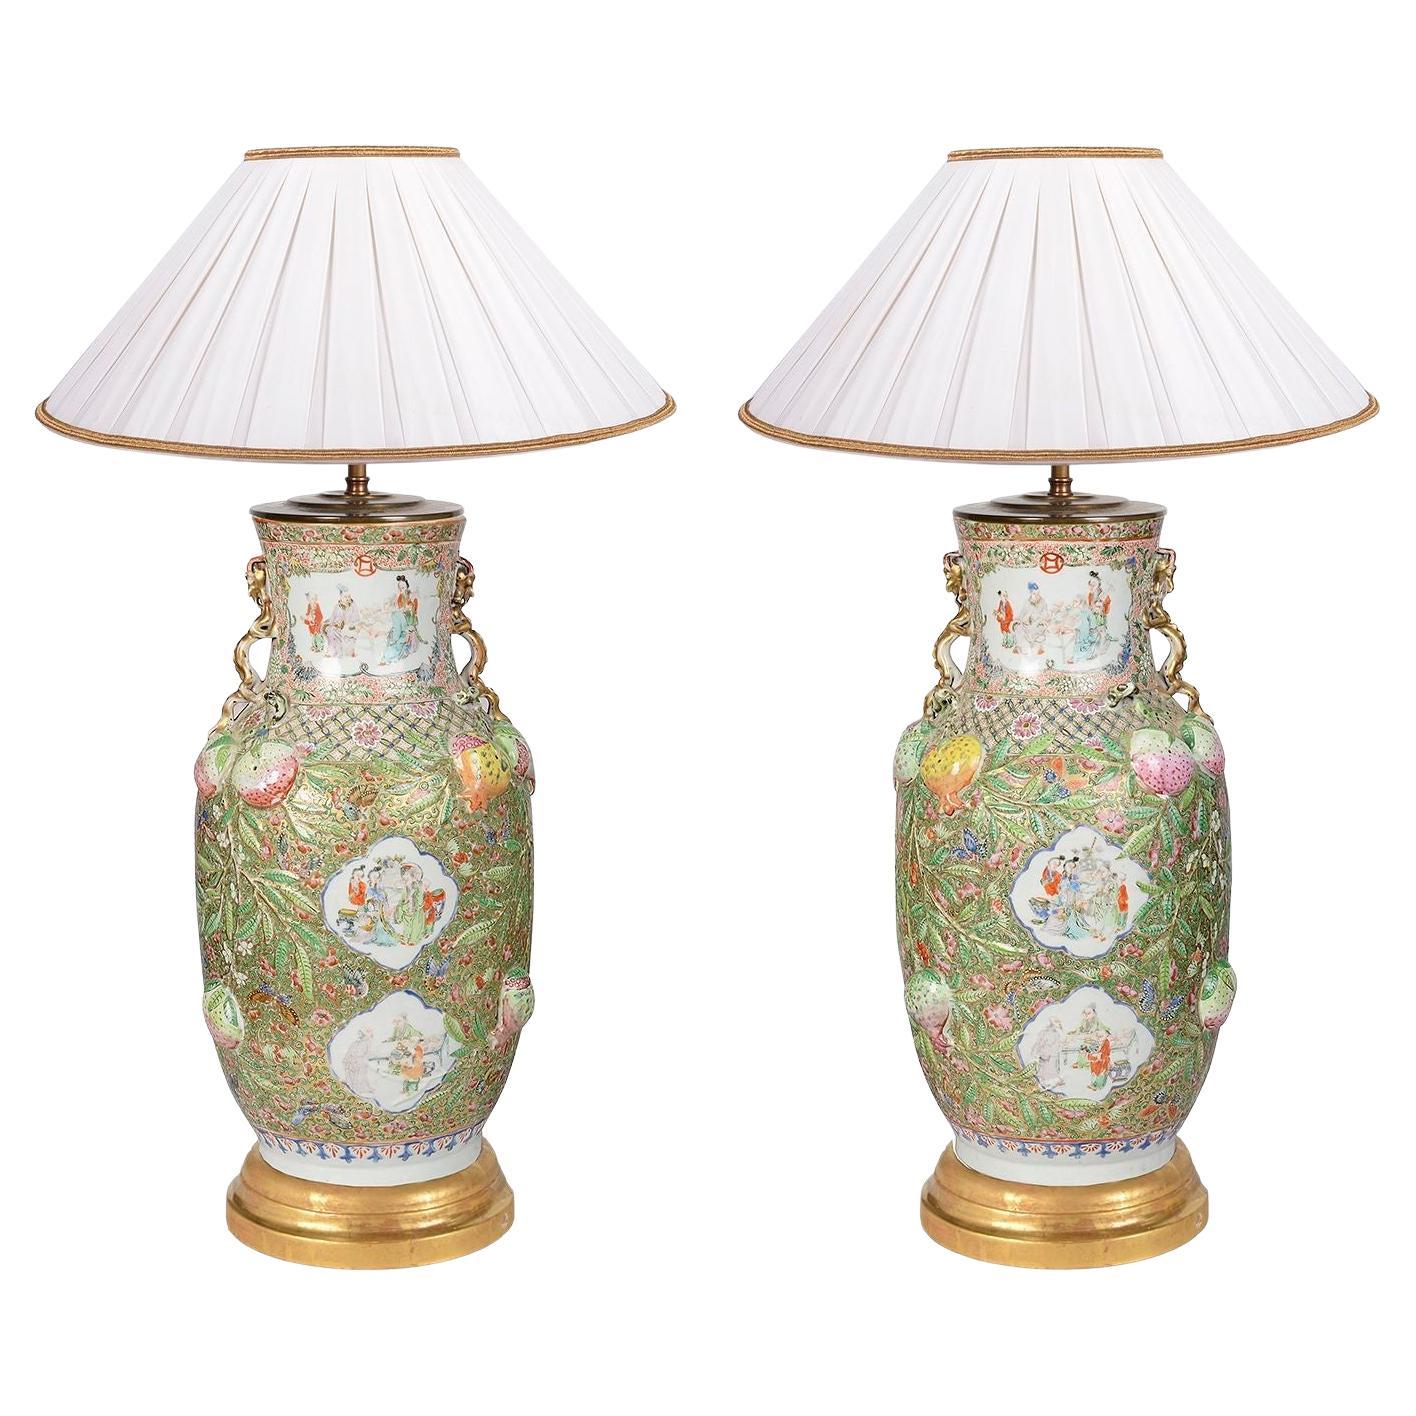 Paar Rosenmedaillon-Porzellanvasen/Lampen aus dem 19. Jahrhundert.